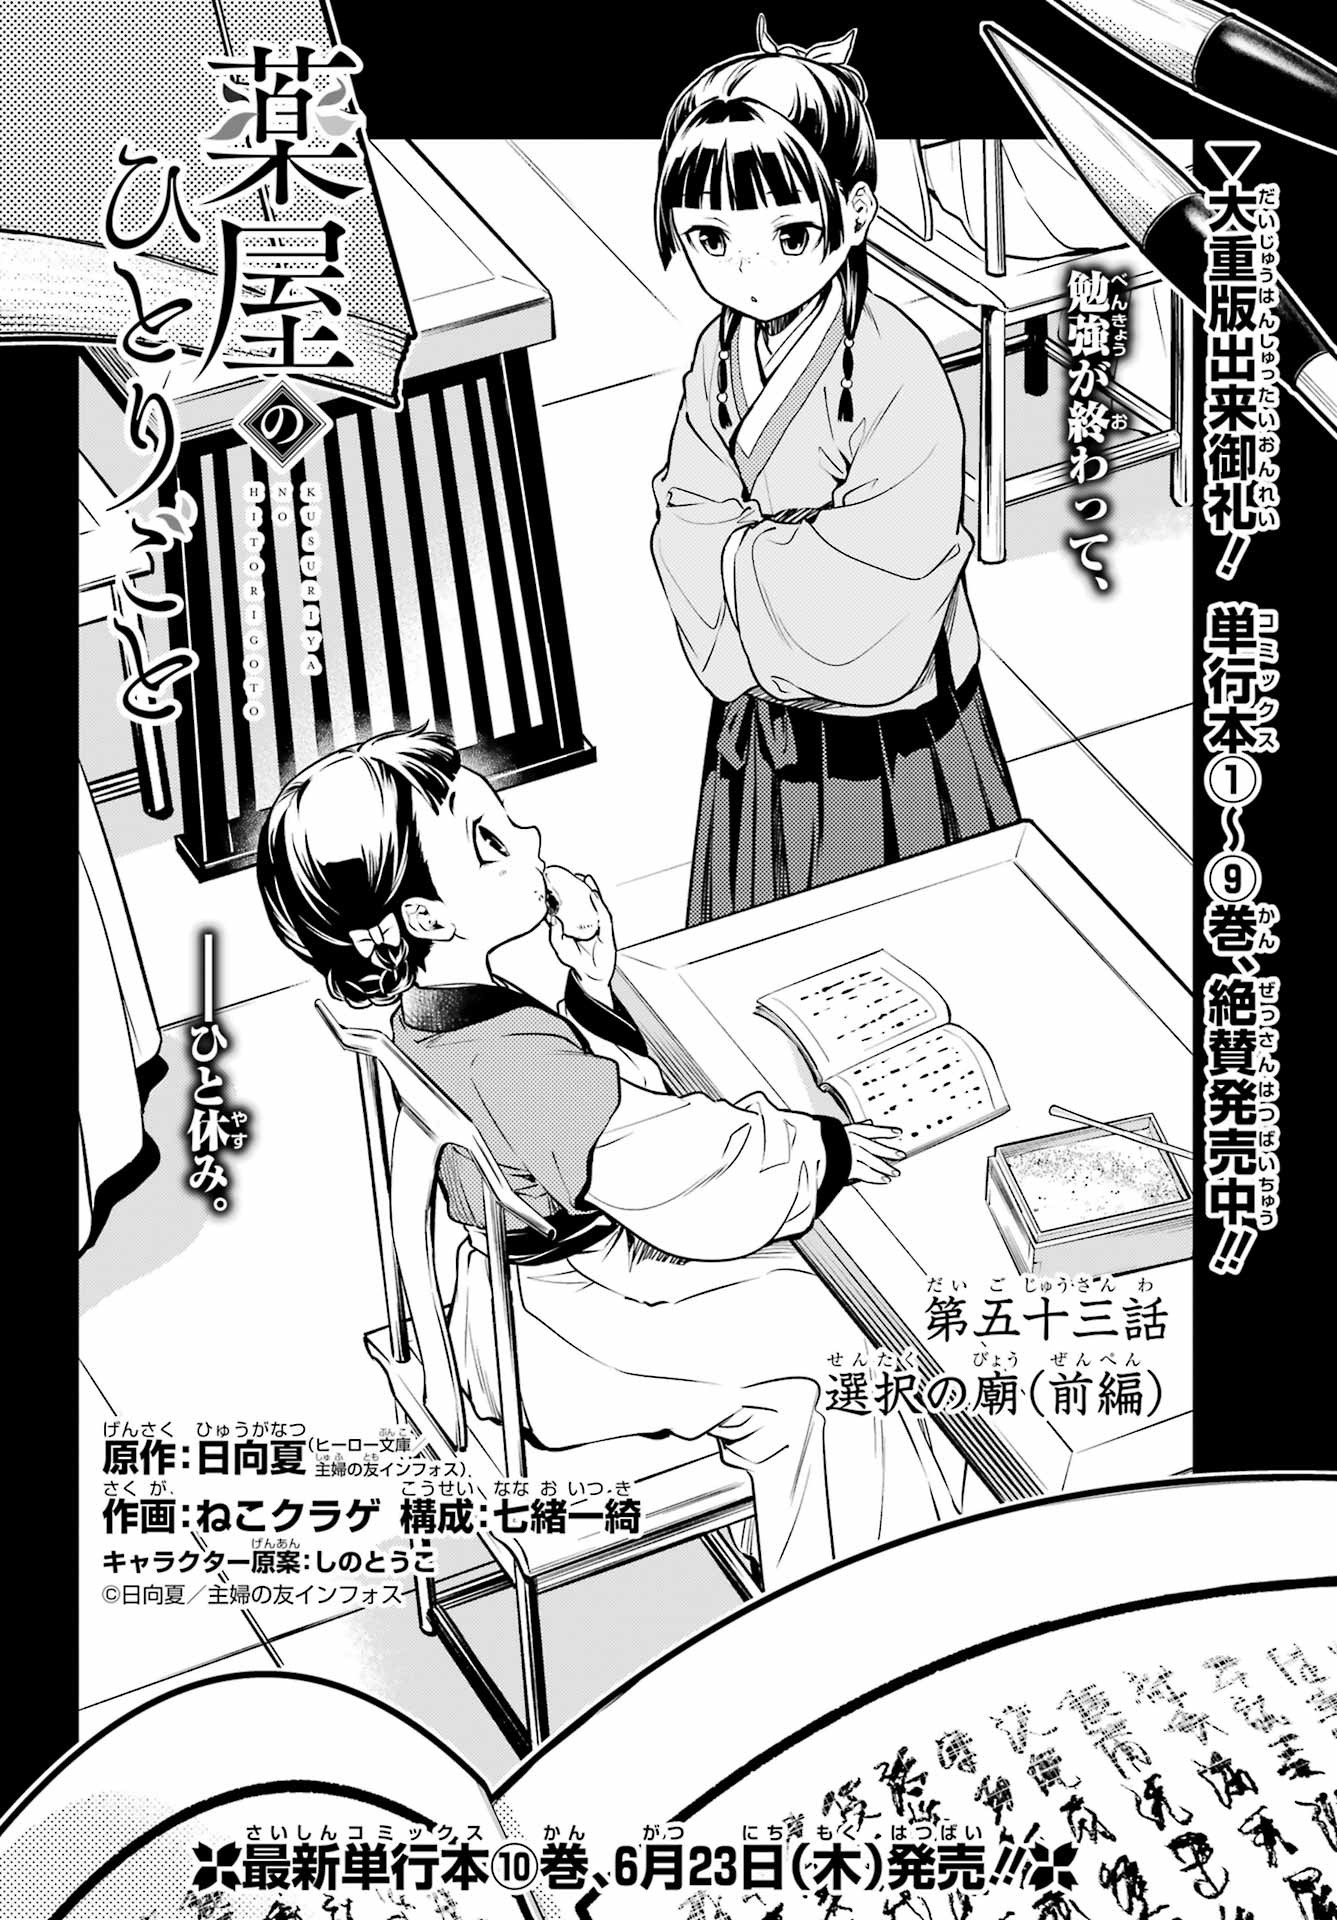 Kusuriya no Hitorigoto - Chapter 53 - Page 4